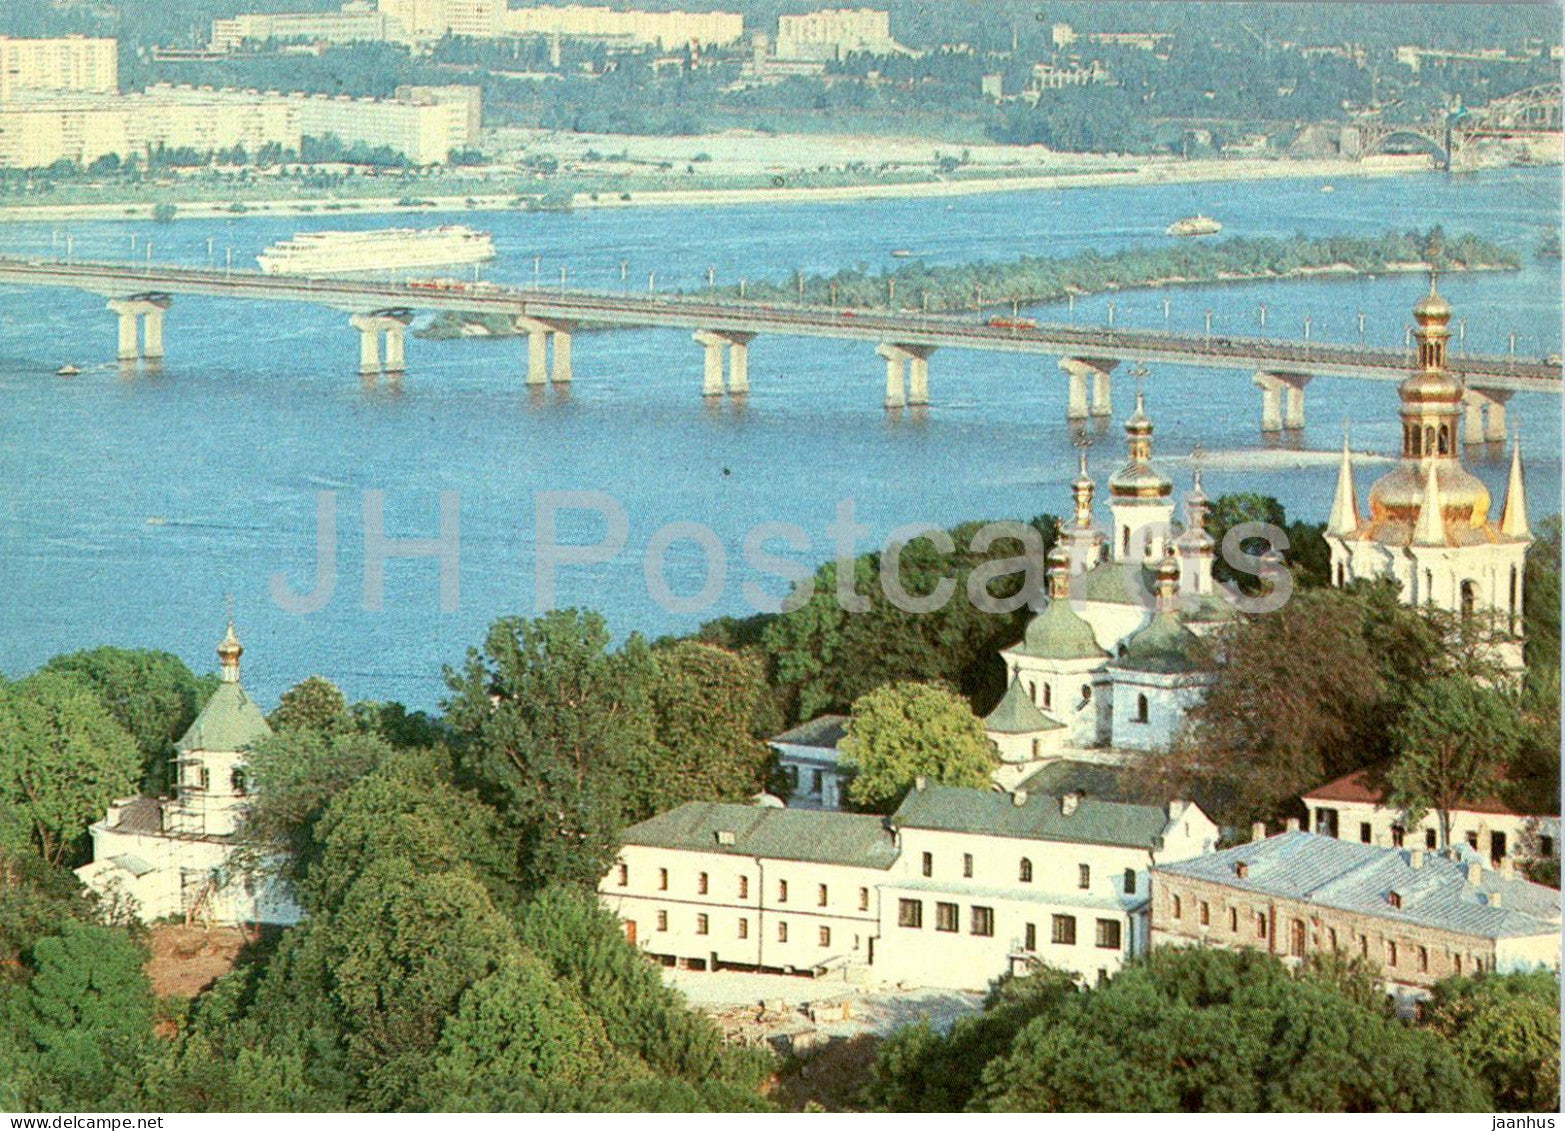 Kyiv Pechersk Lavra - View at the Far Caves - bridge - 1990 - Ukraine USSR - unused - JH Postcards